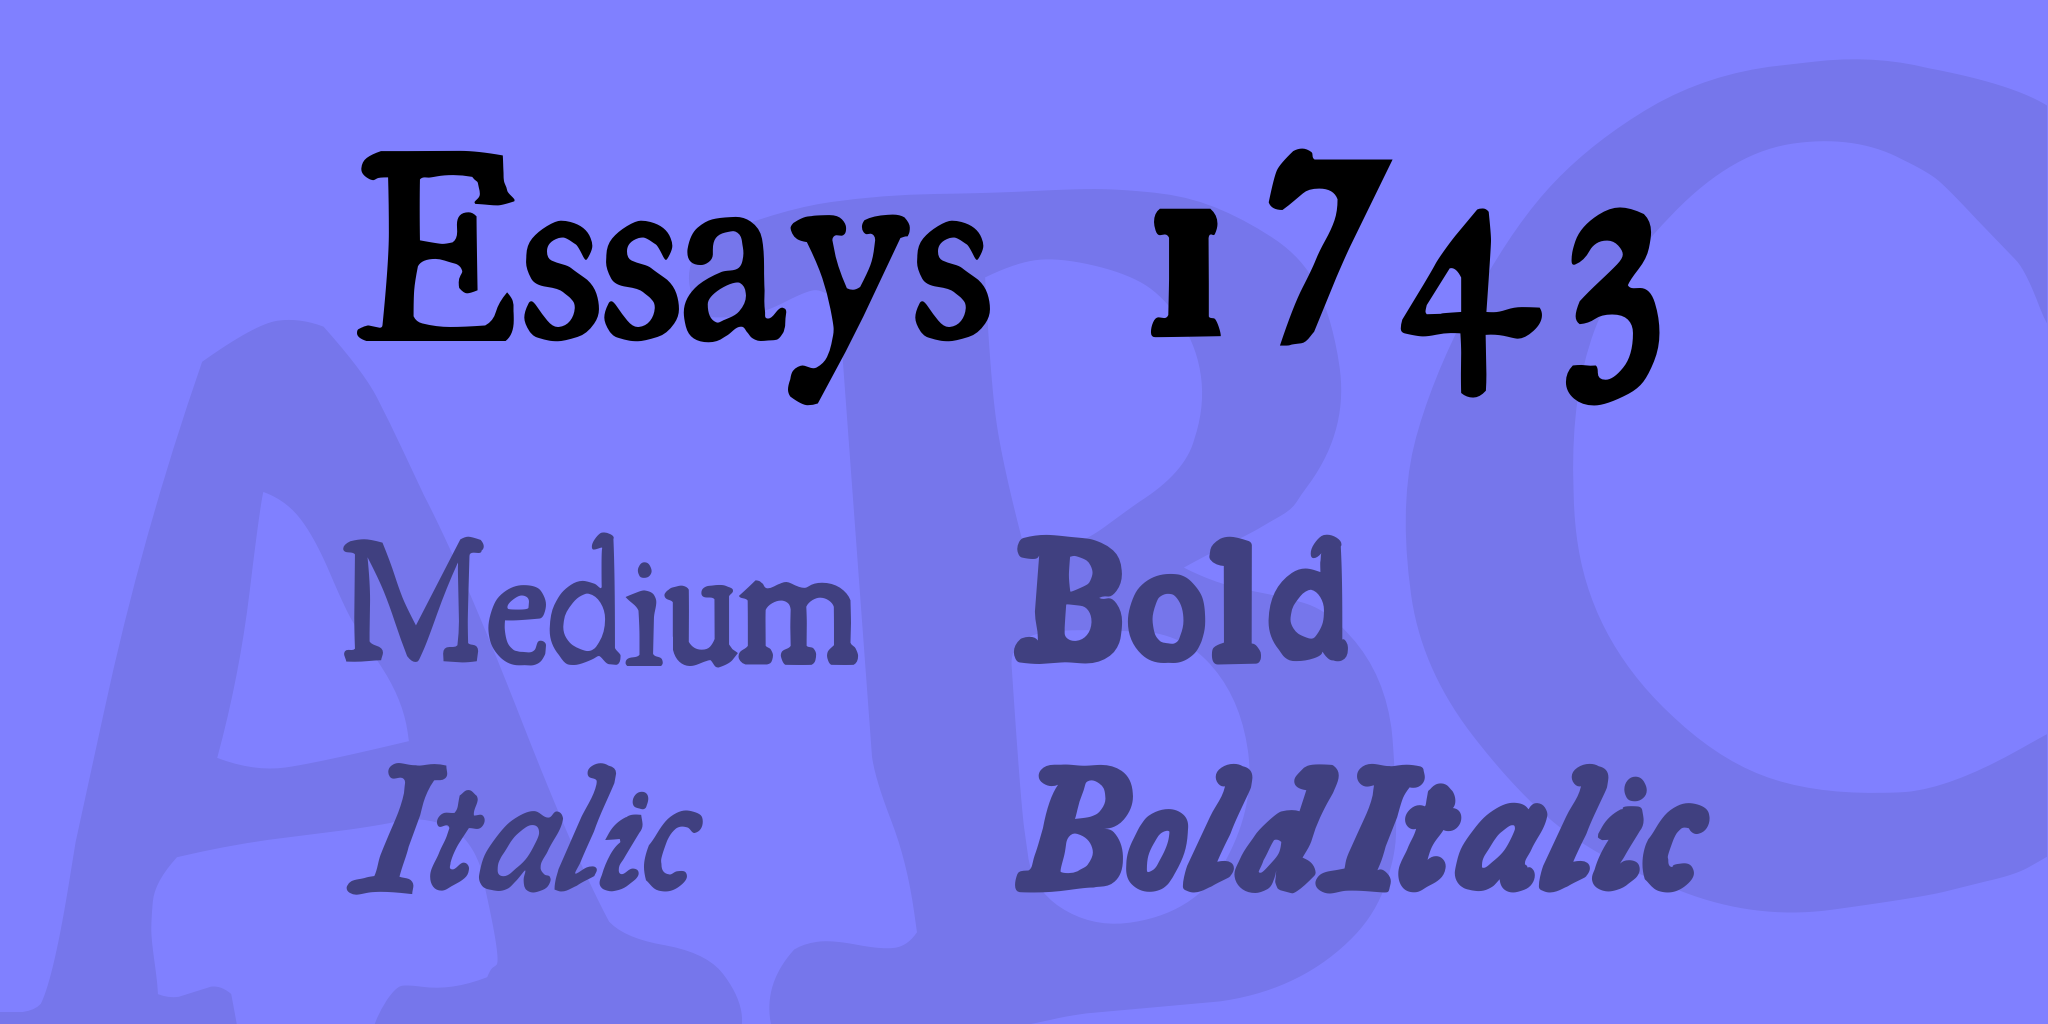 essays 1743 font